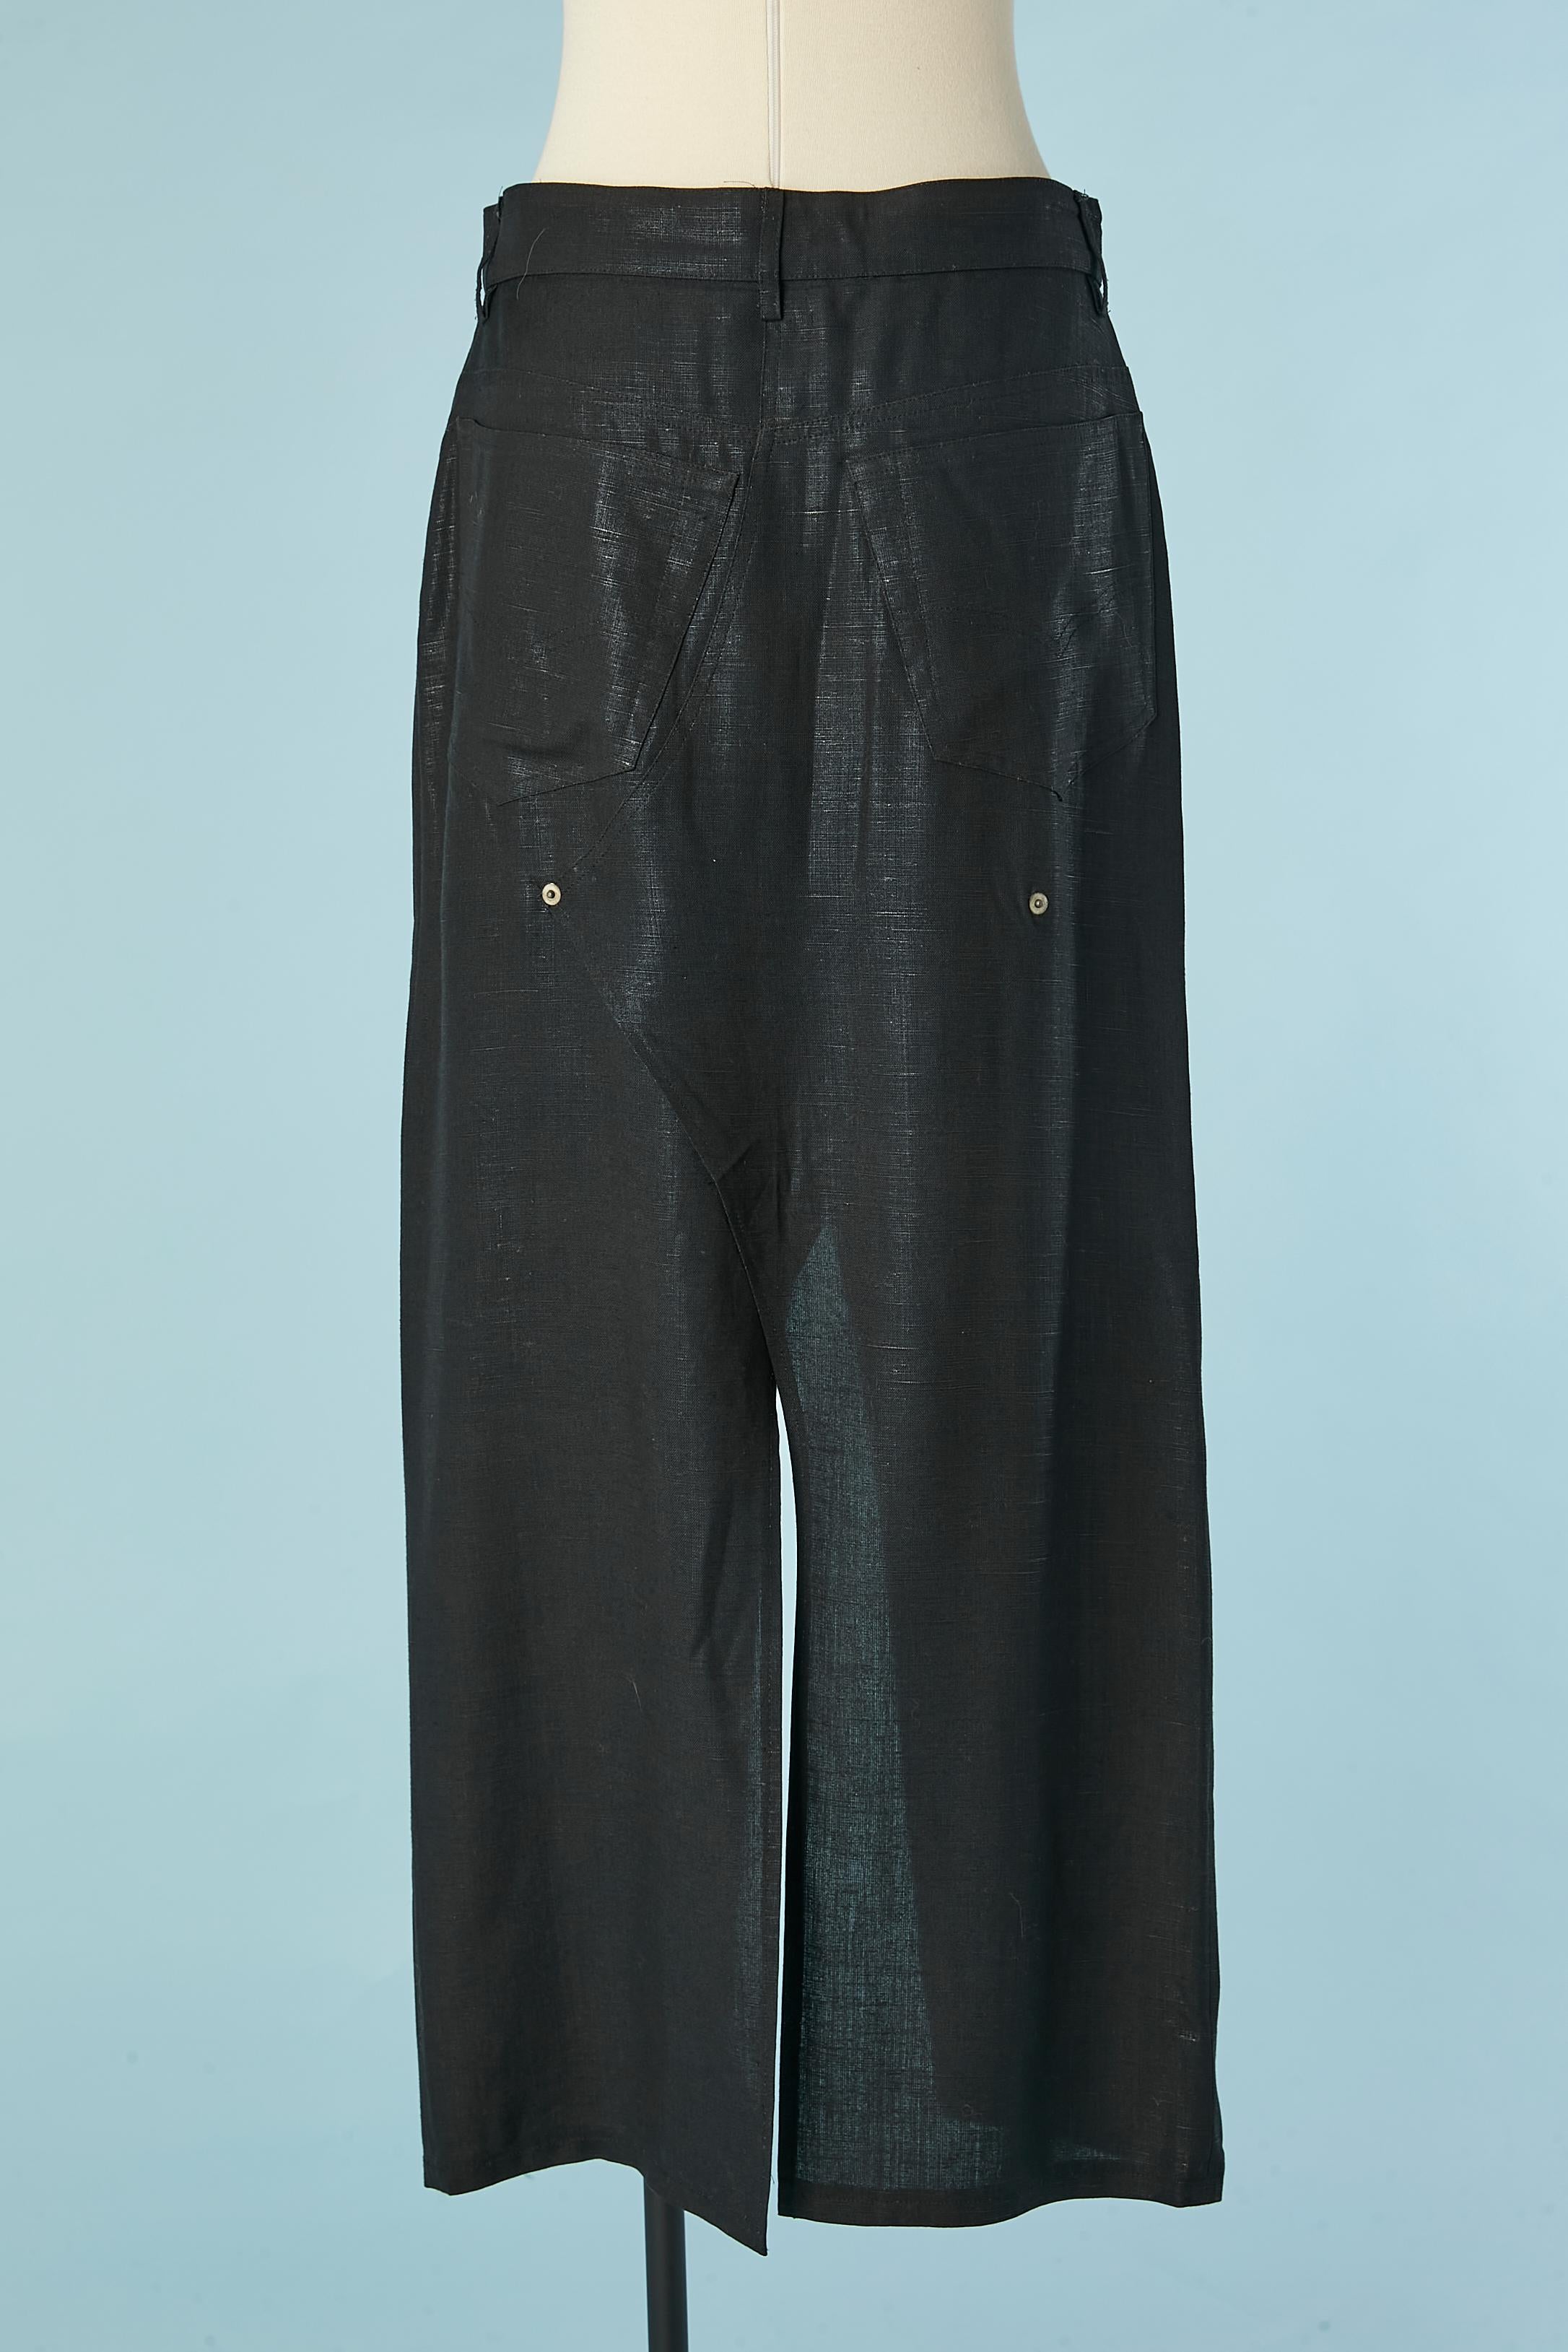 Women's or Men's Black shiny rayon and linen skirt-trouser John Galliano  For Sale